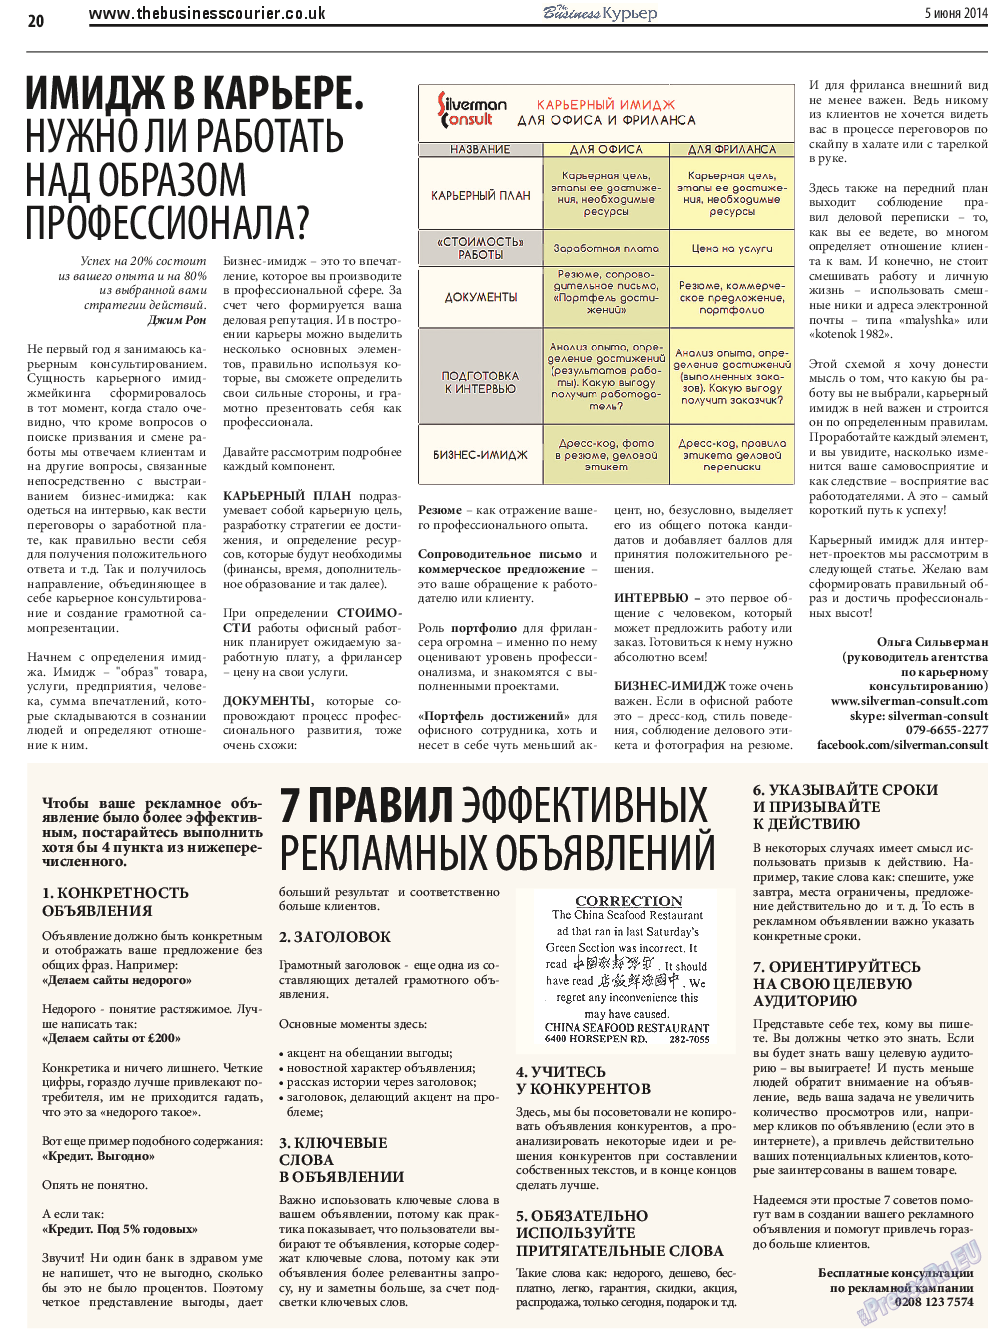 The Business Курьер, газета. 2014 №24 стр.20